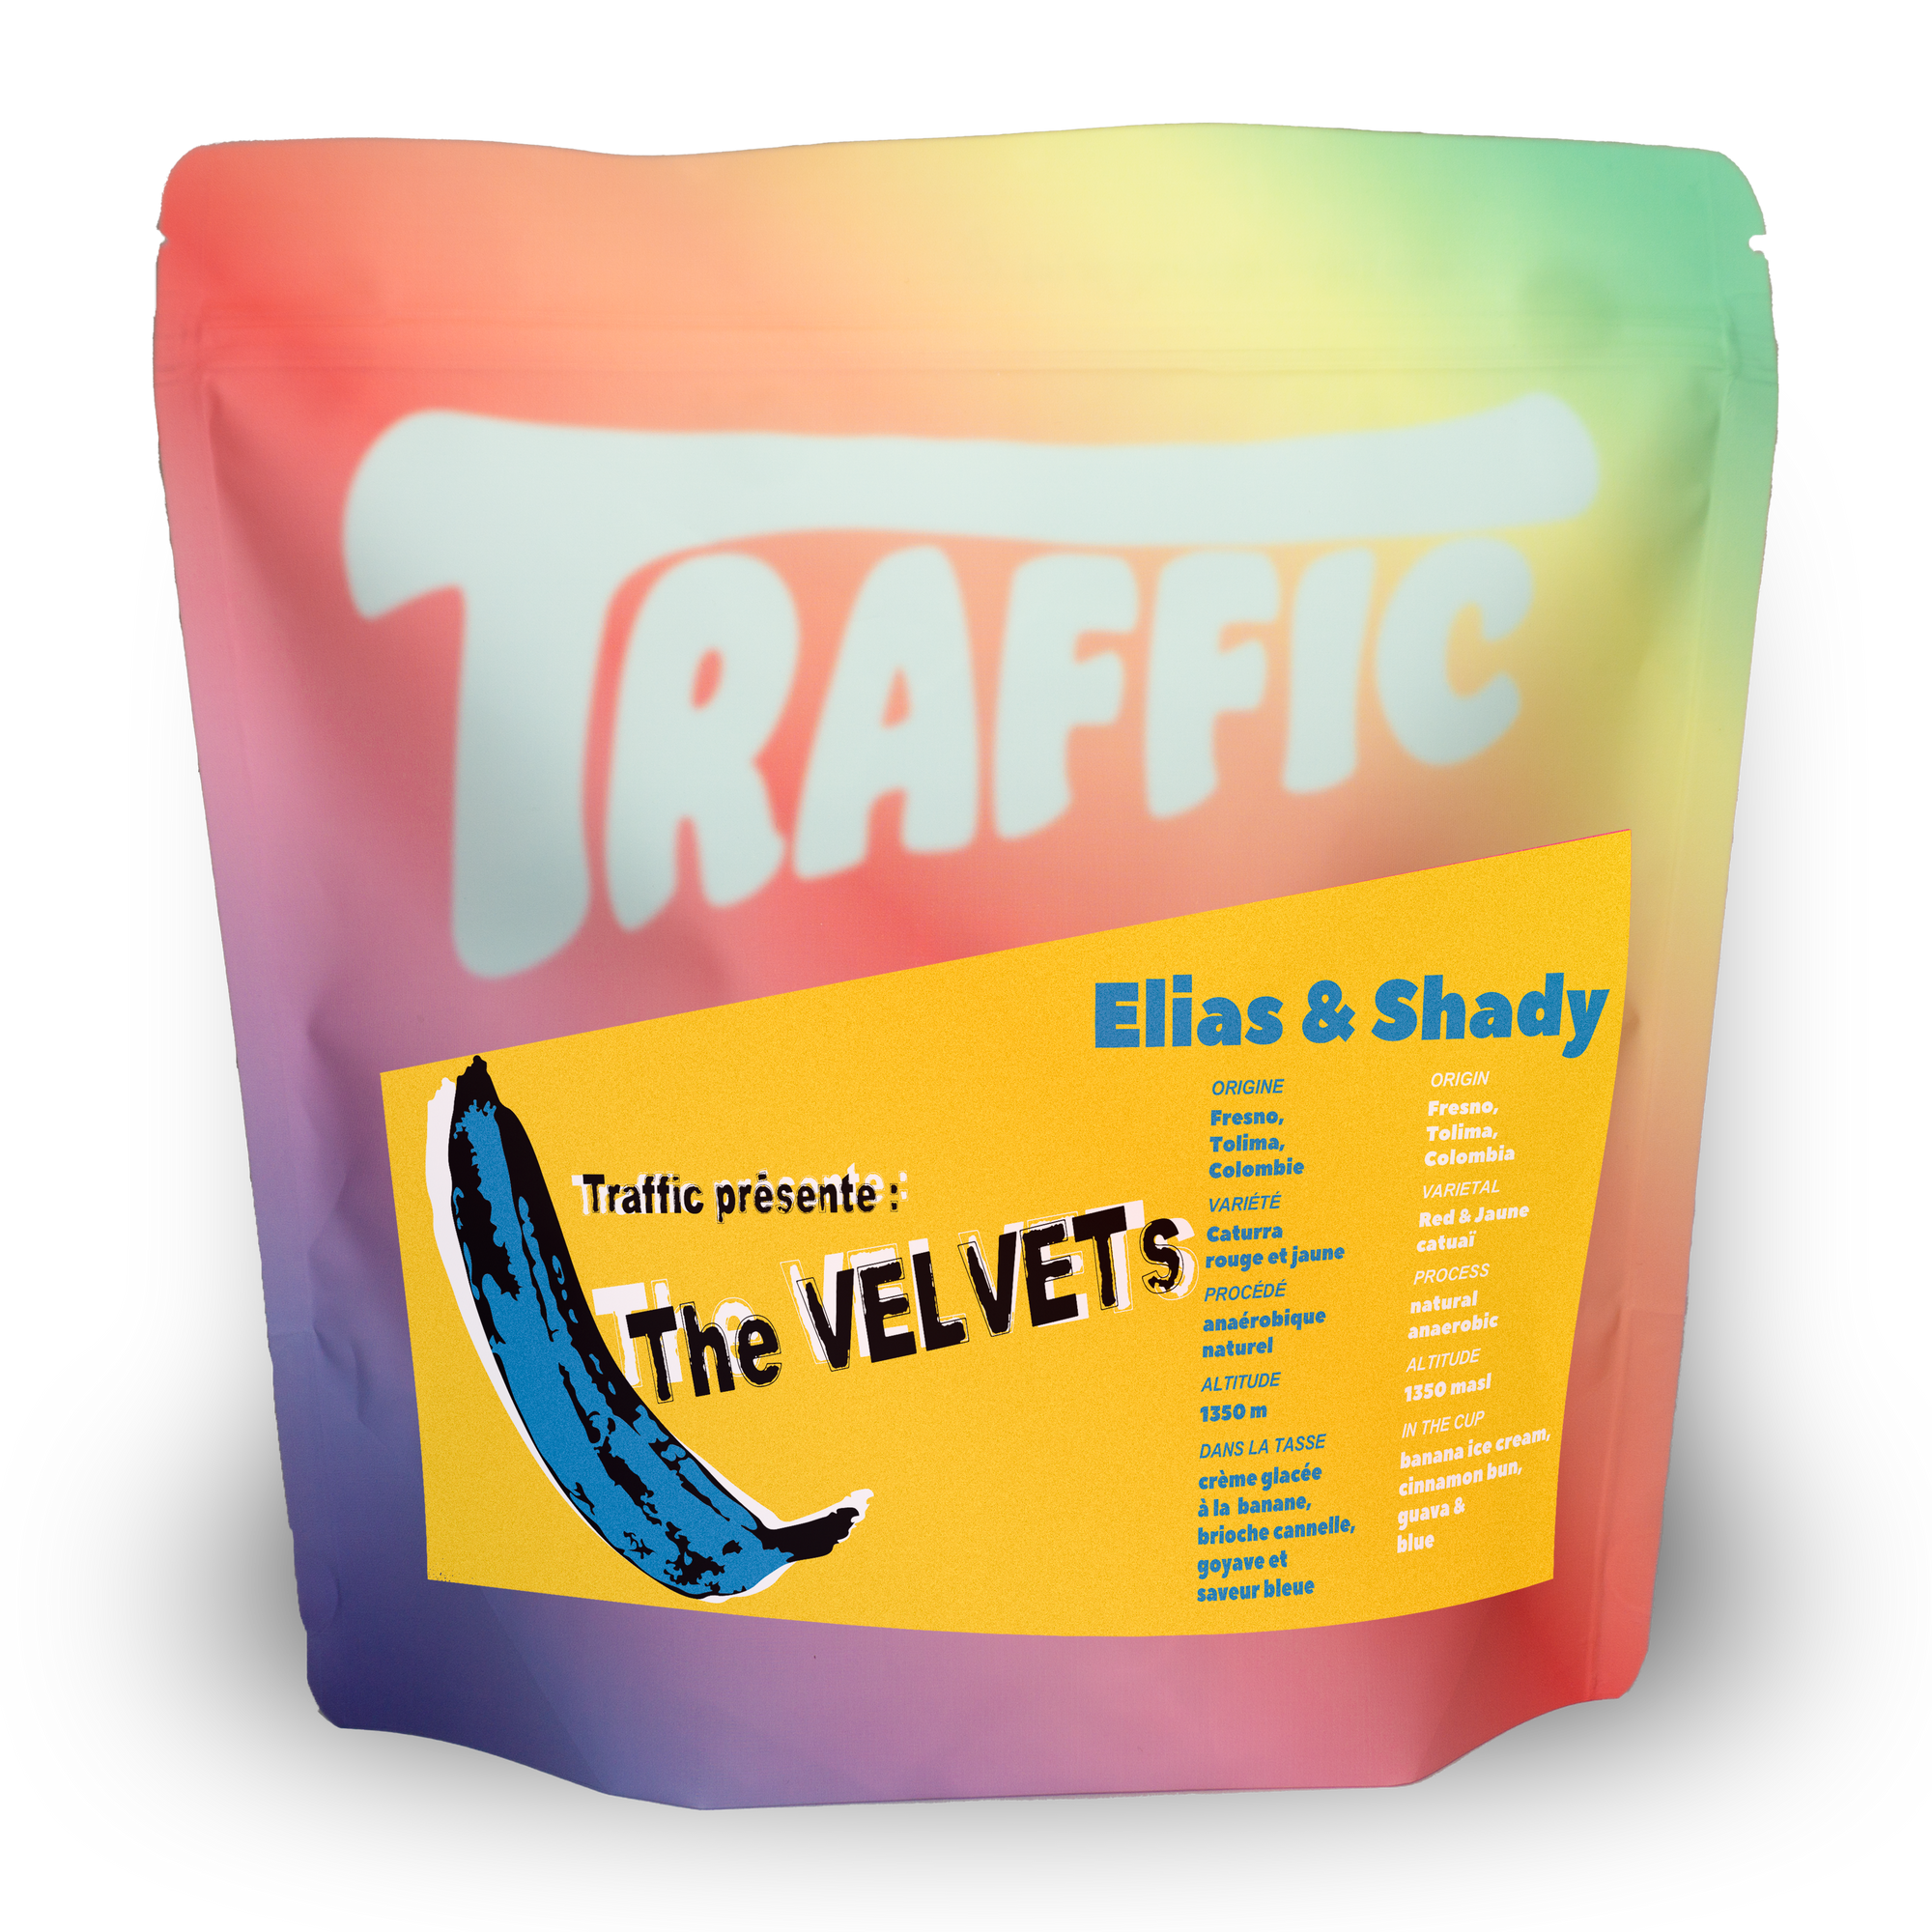 Elias & Shady "The Velvets"